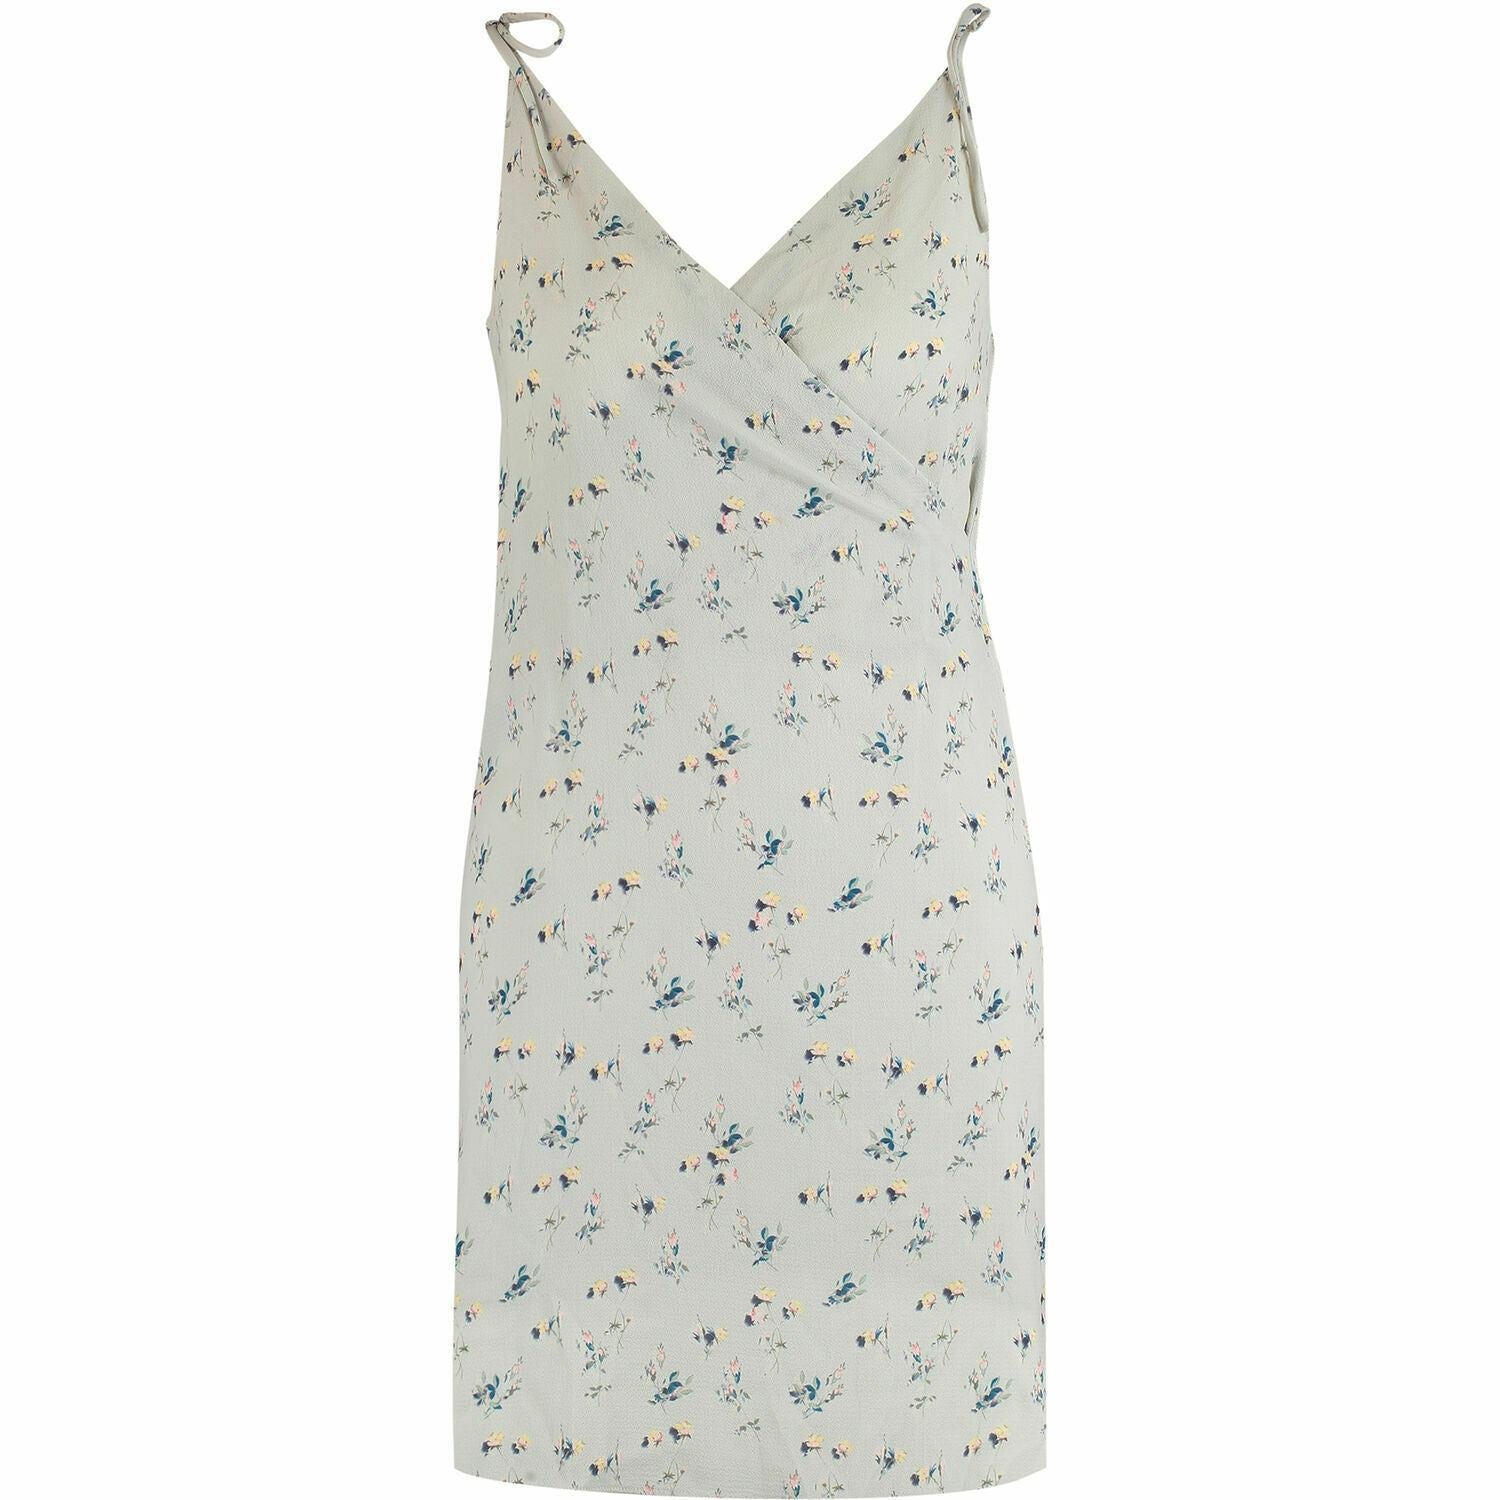 ALLSAINTS Women's MIKA Somer Crepe Dress, Soap Grey/Floral, size S / UK 10